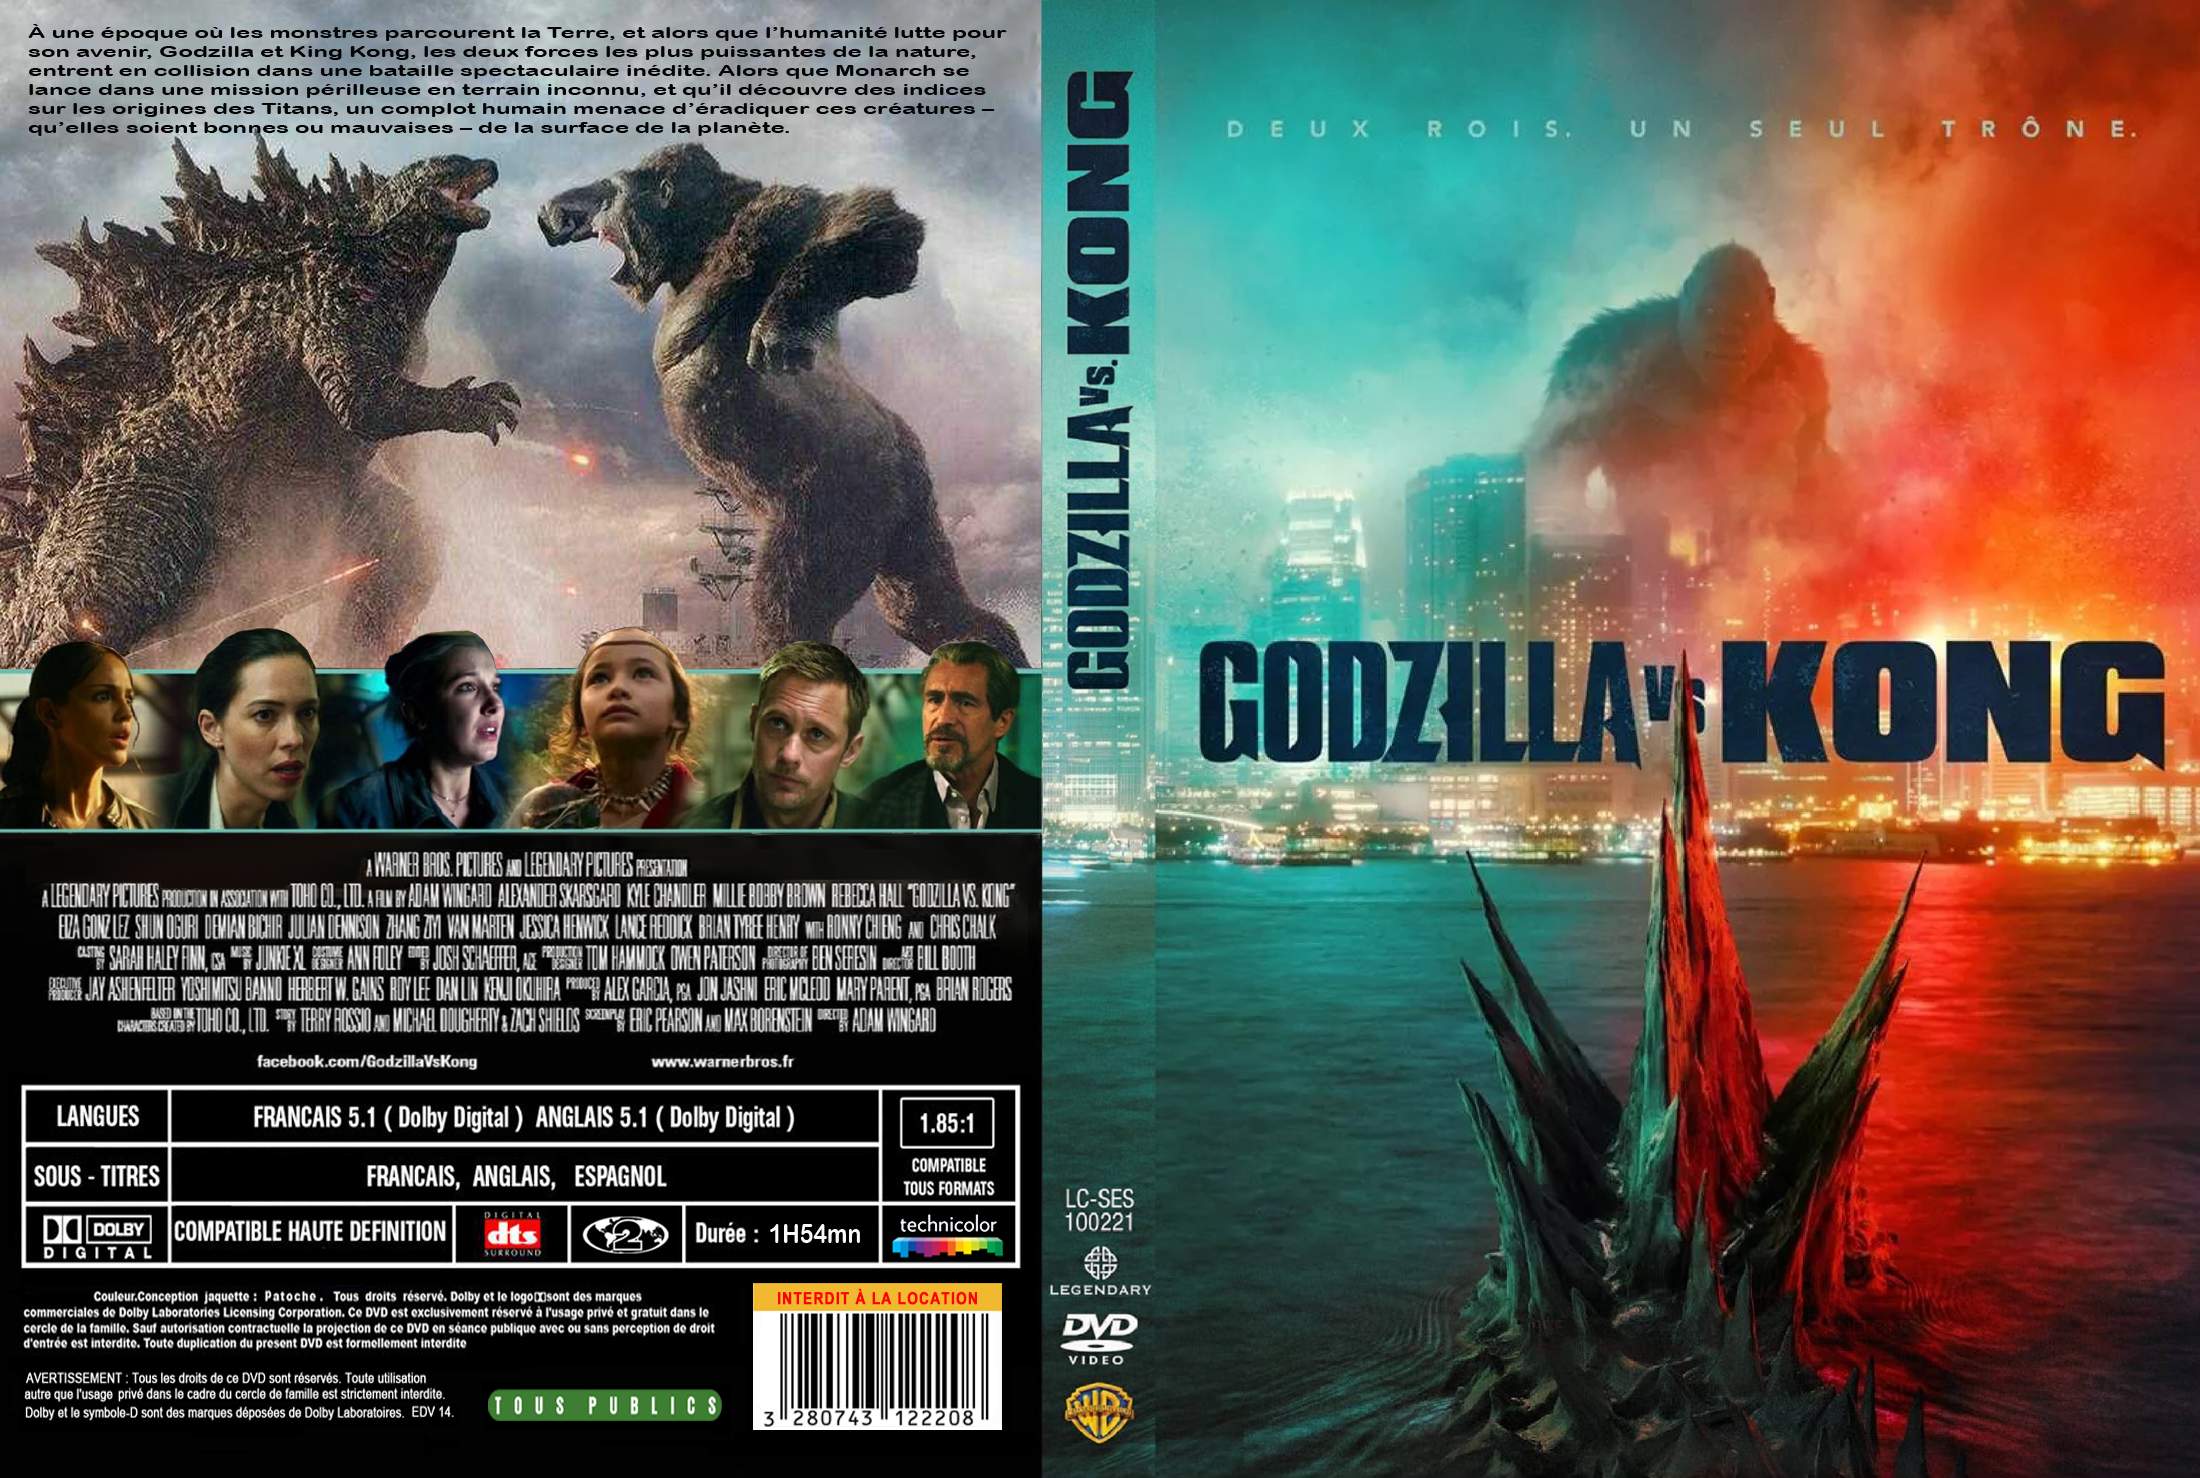 Jaquette DVD Godzilla vs Kong custom